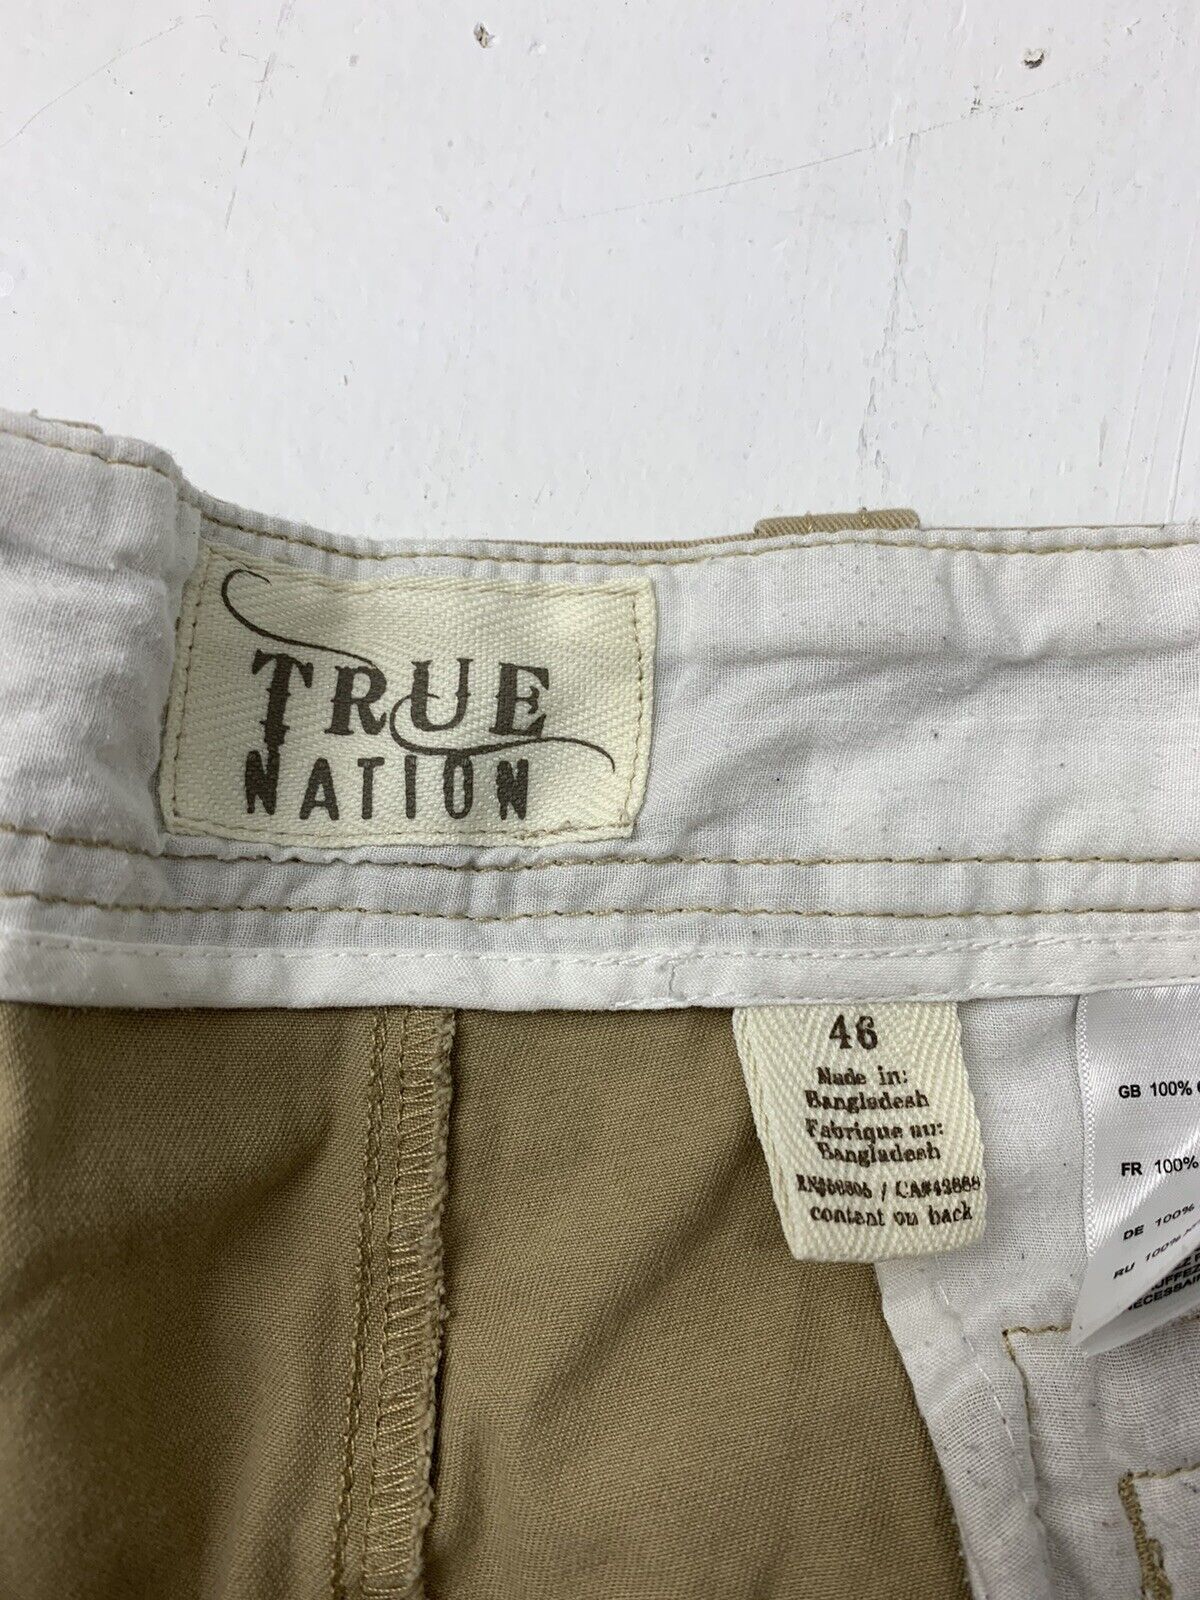 True Nation Mens Tan Cargo Shorts Size 46 - beyond exchange